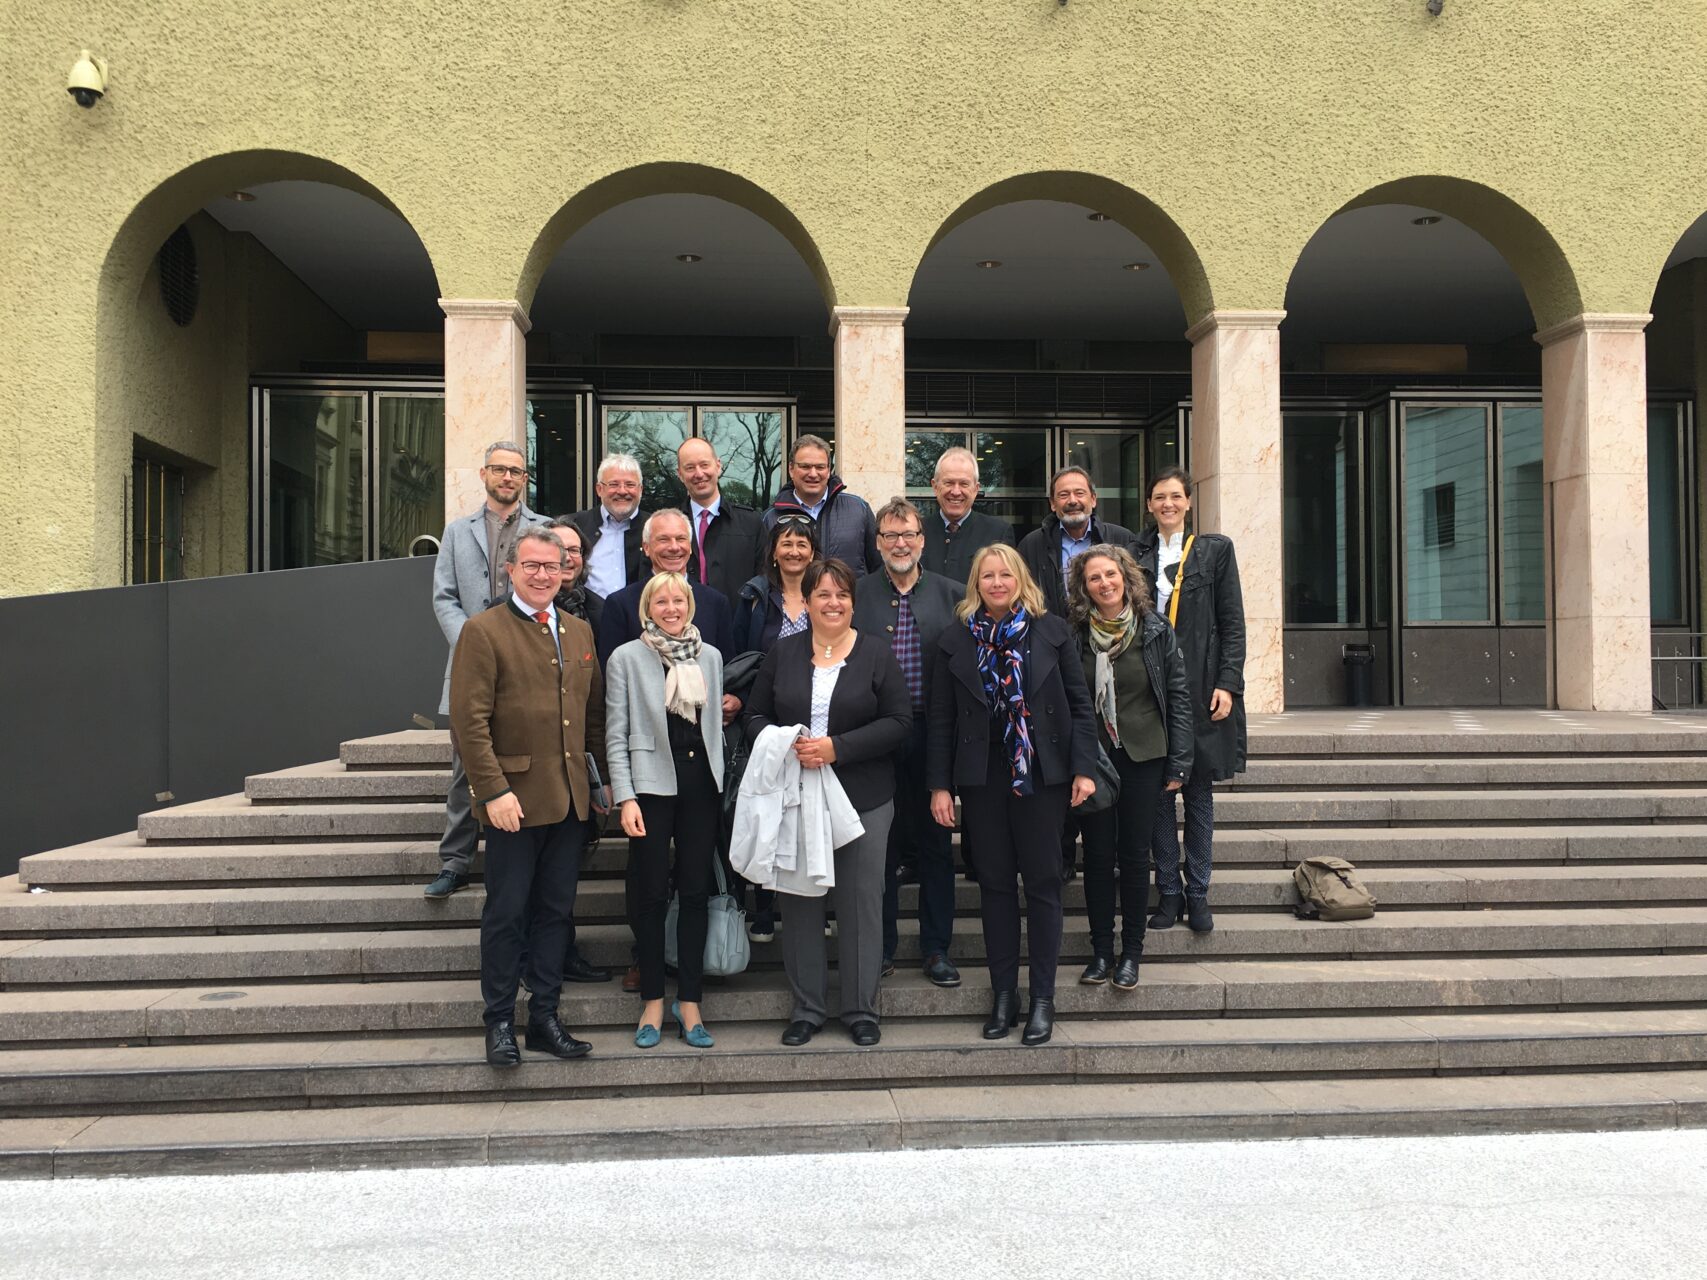 Exkursionsteilnehmer vor dem Südtiroler Landtag